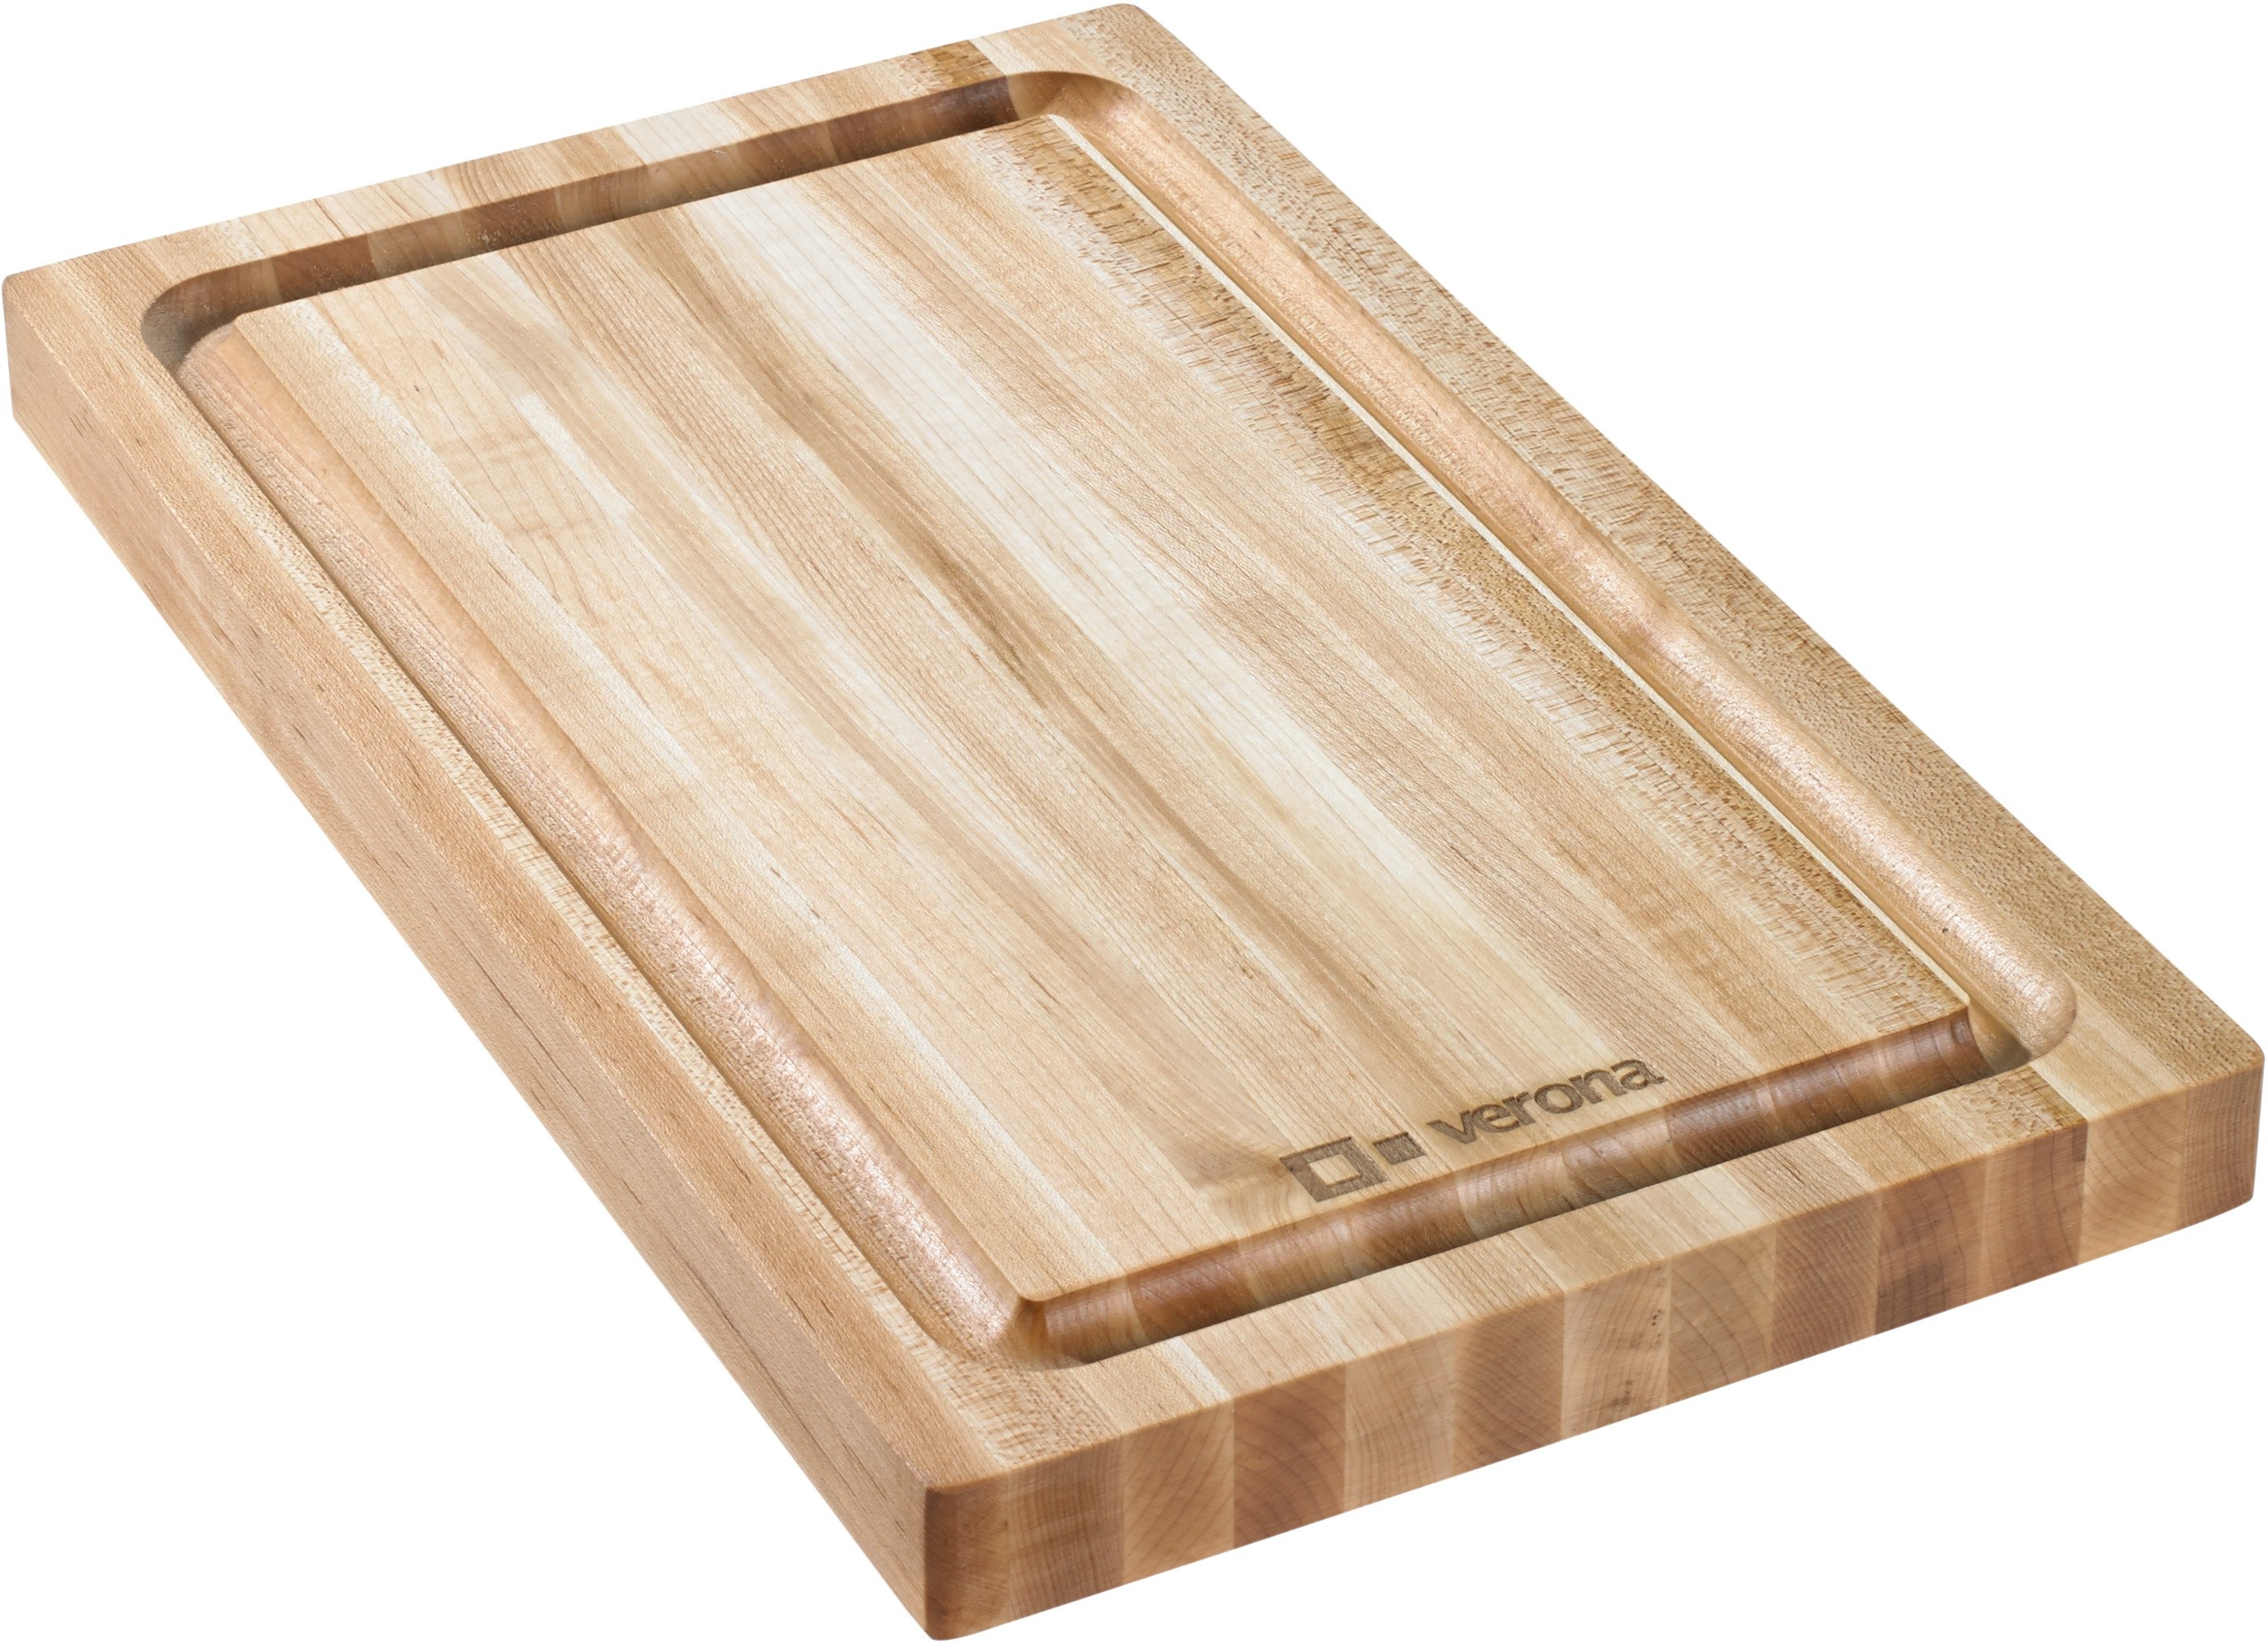 Kess InHouse BE1039AWB01 Wooden Cutting Board White 